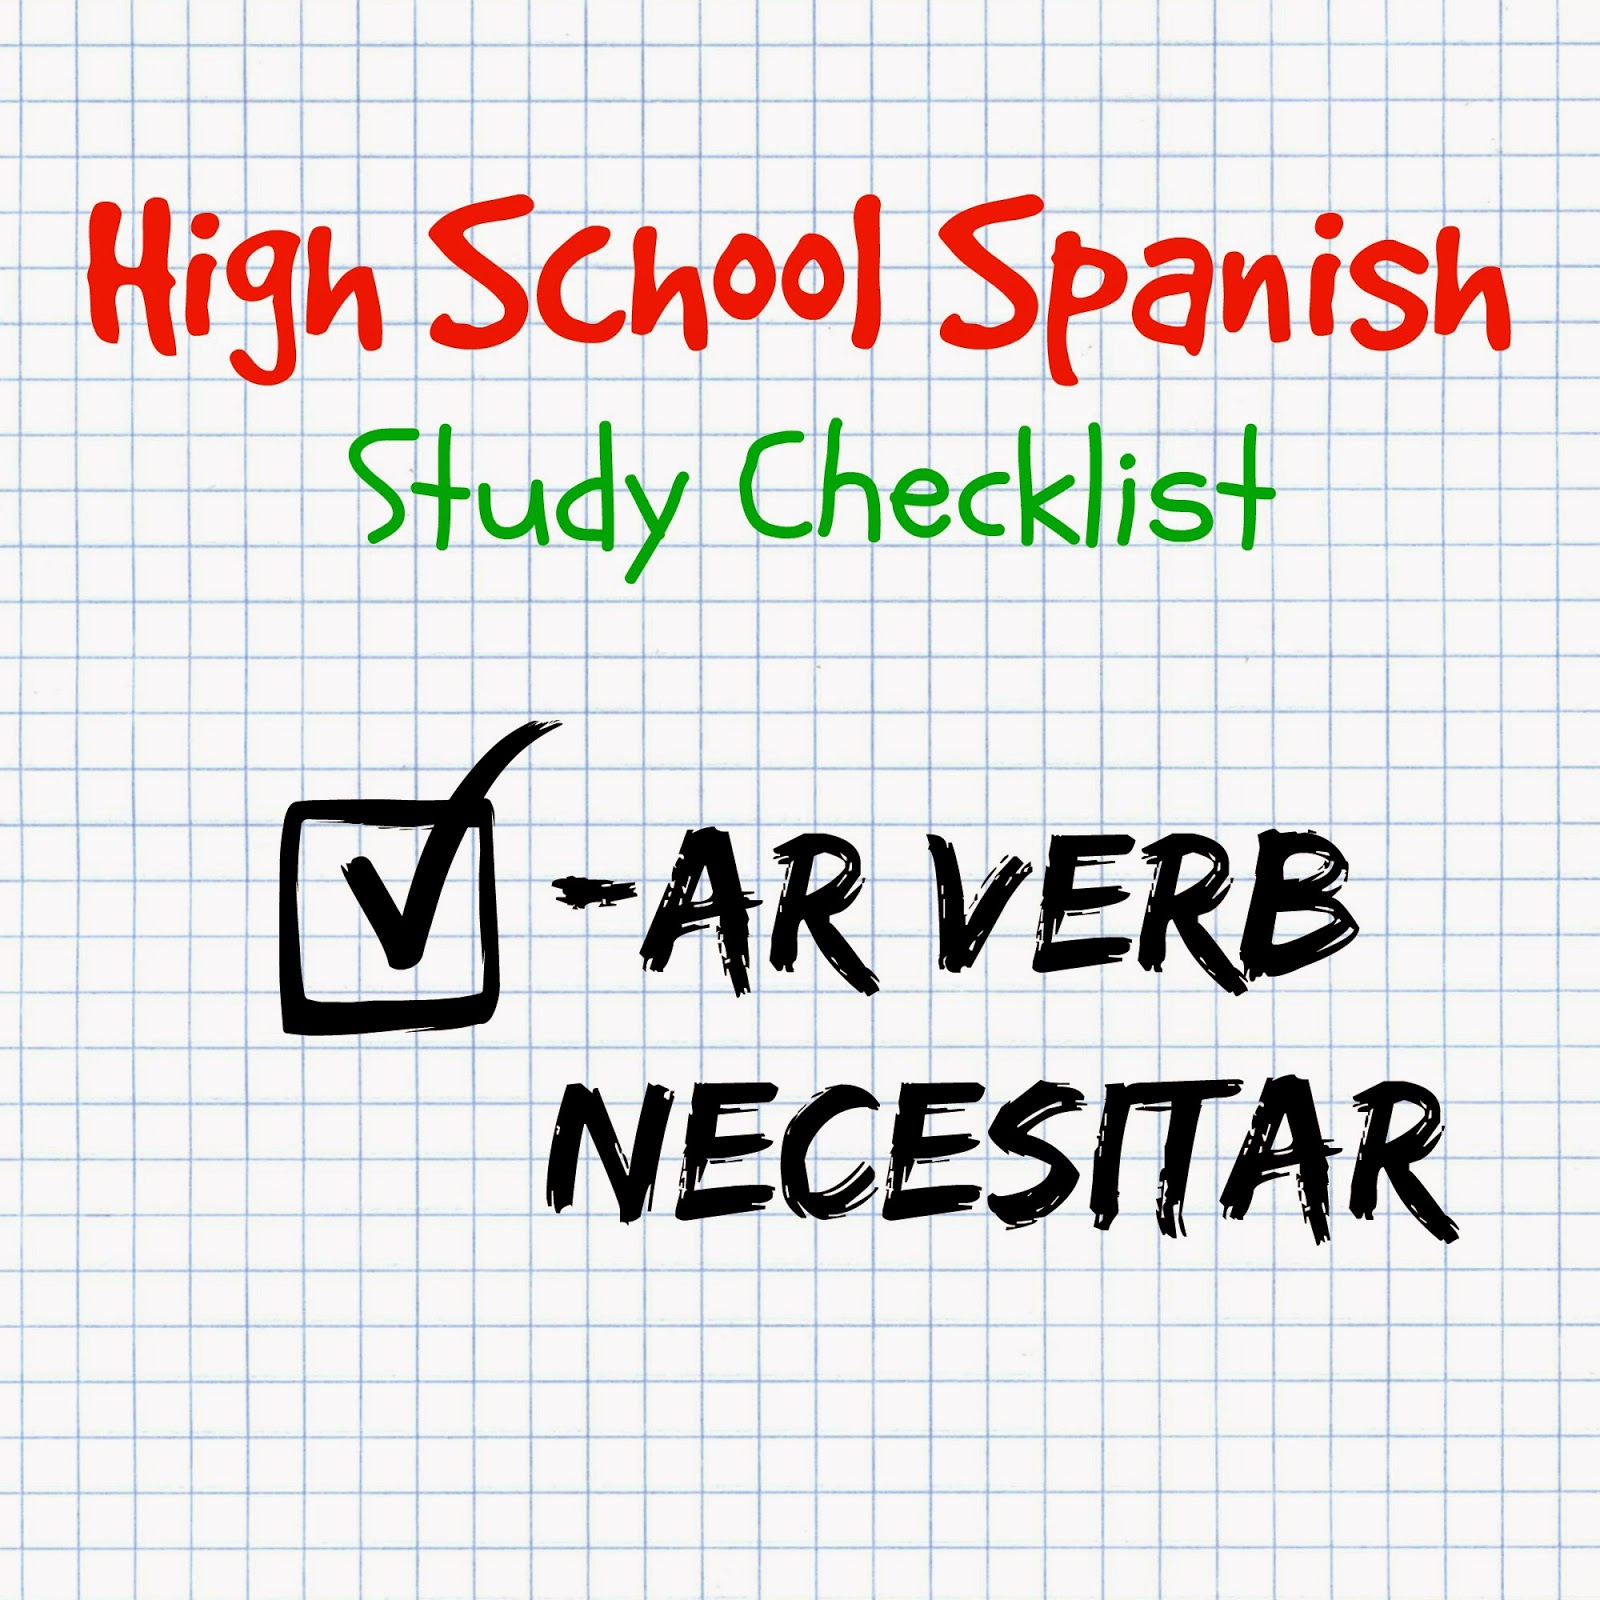 High School Spanish: The Verb NECESITAR (to need)